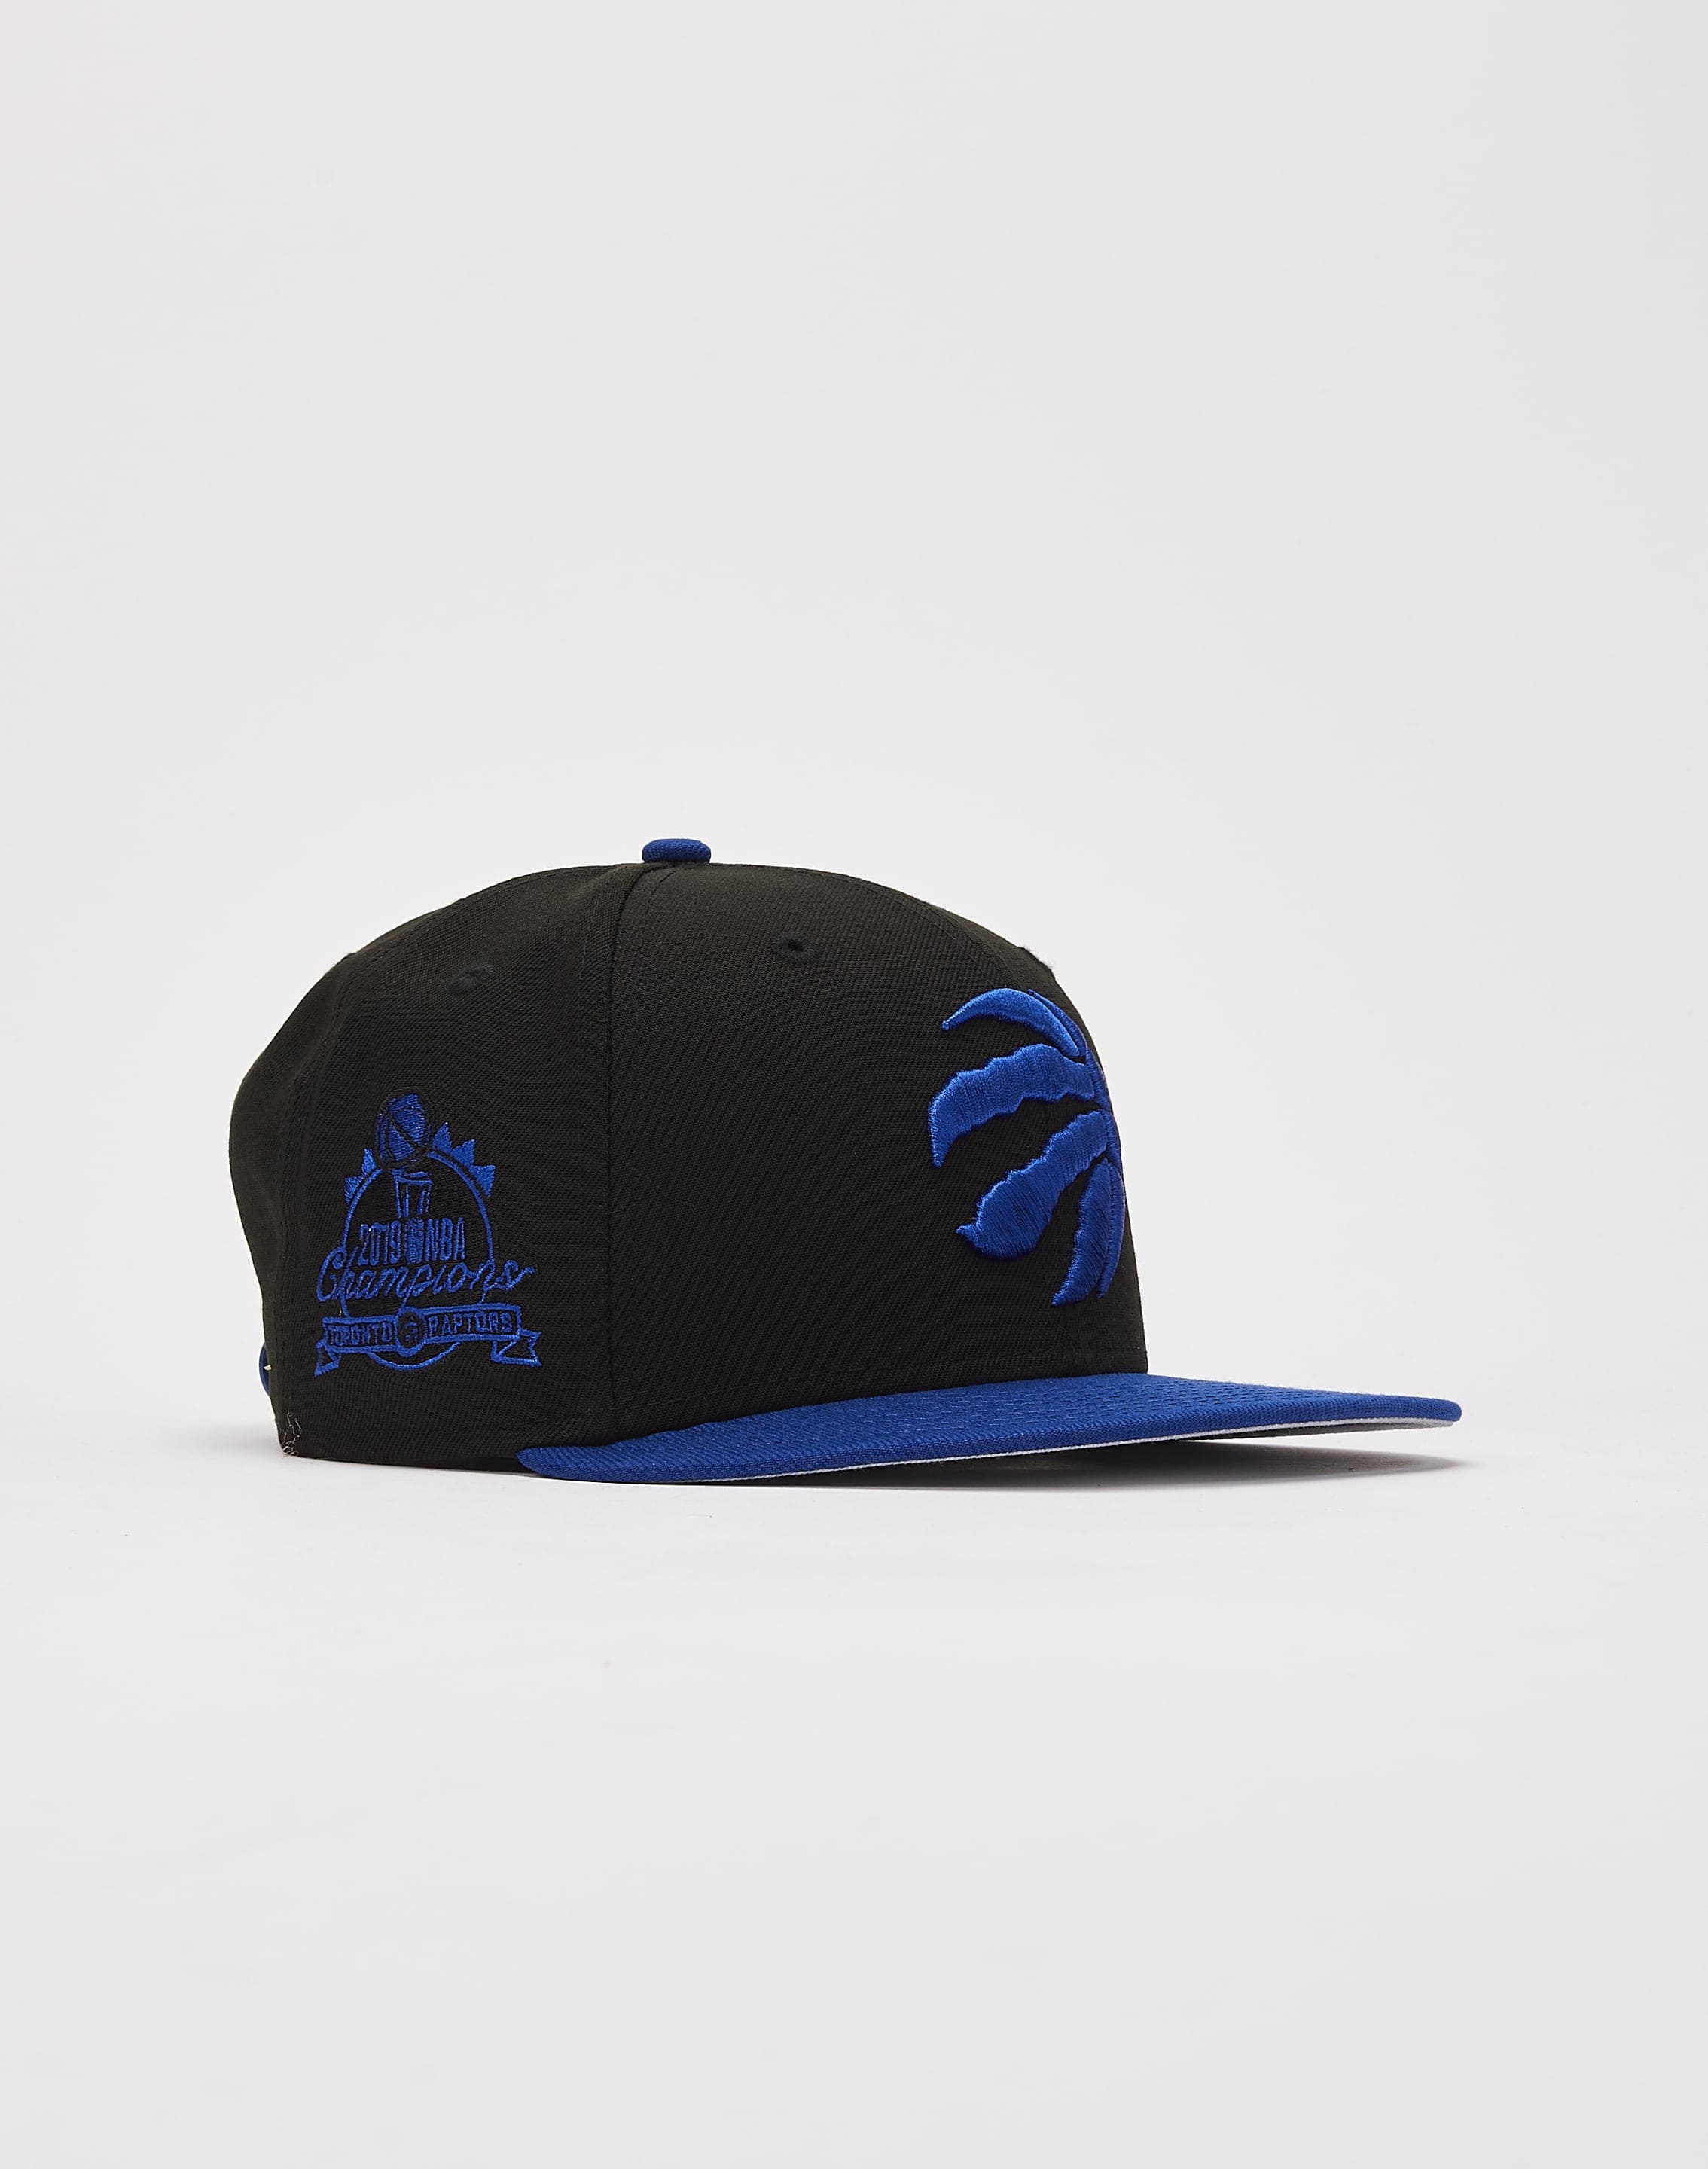 New Era Black Toronto Raptors 9FIFTY Snapback adjustable Hat 